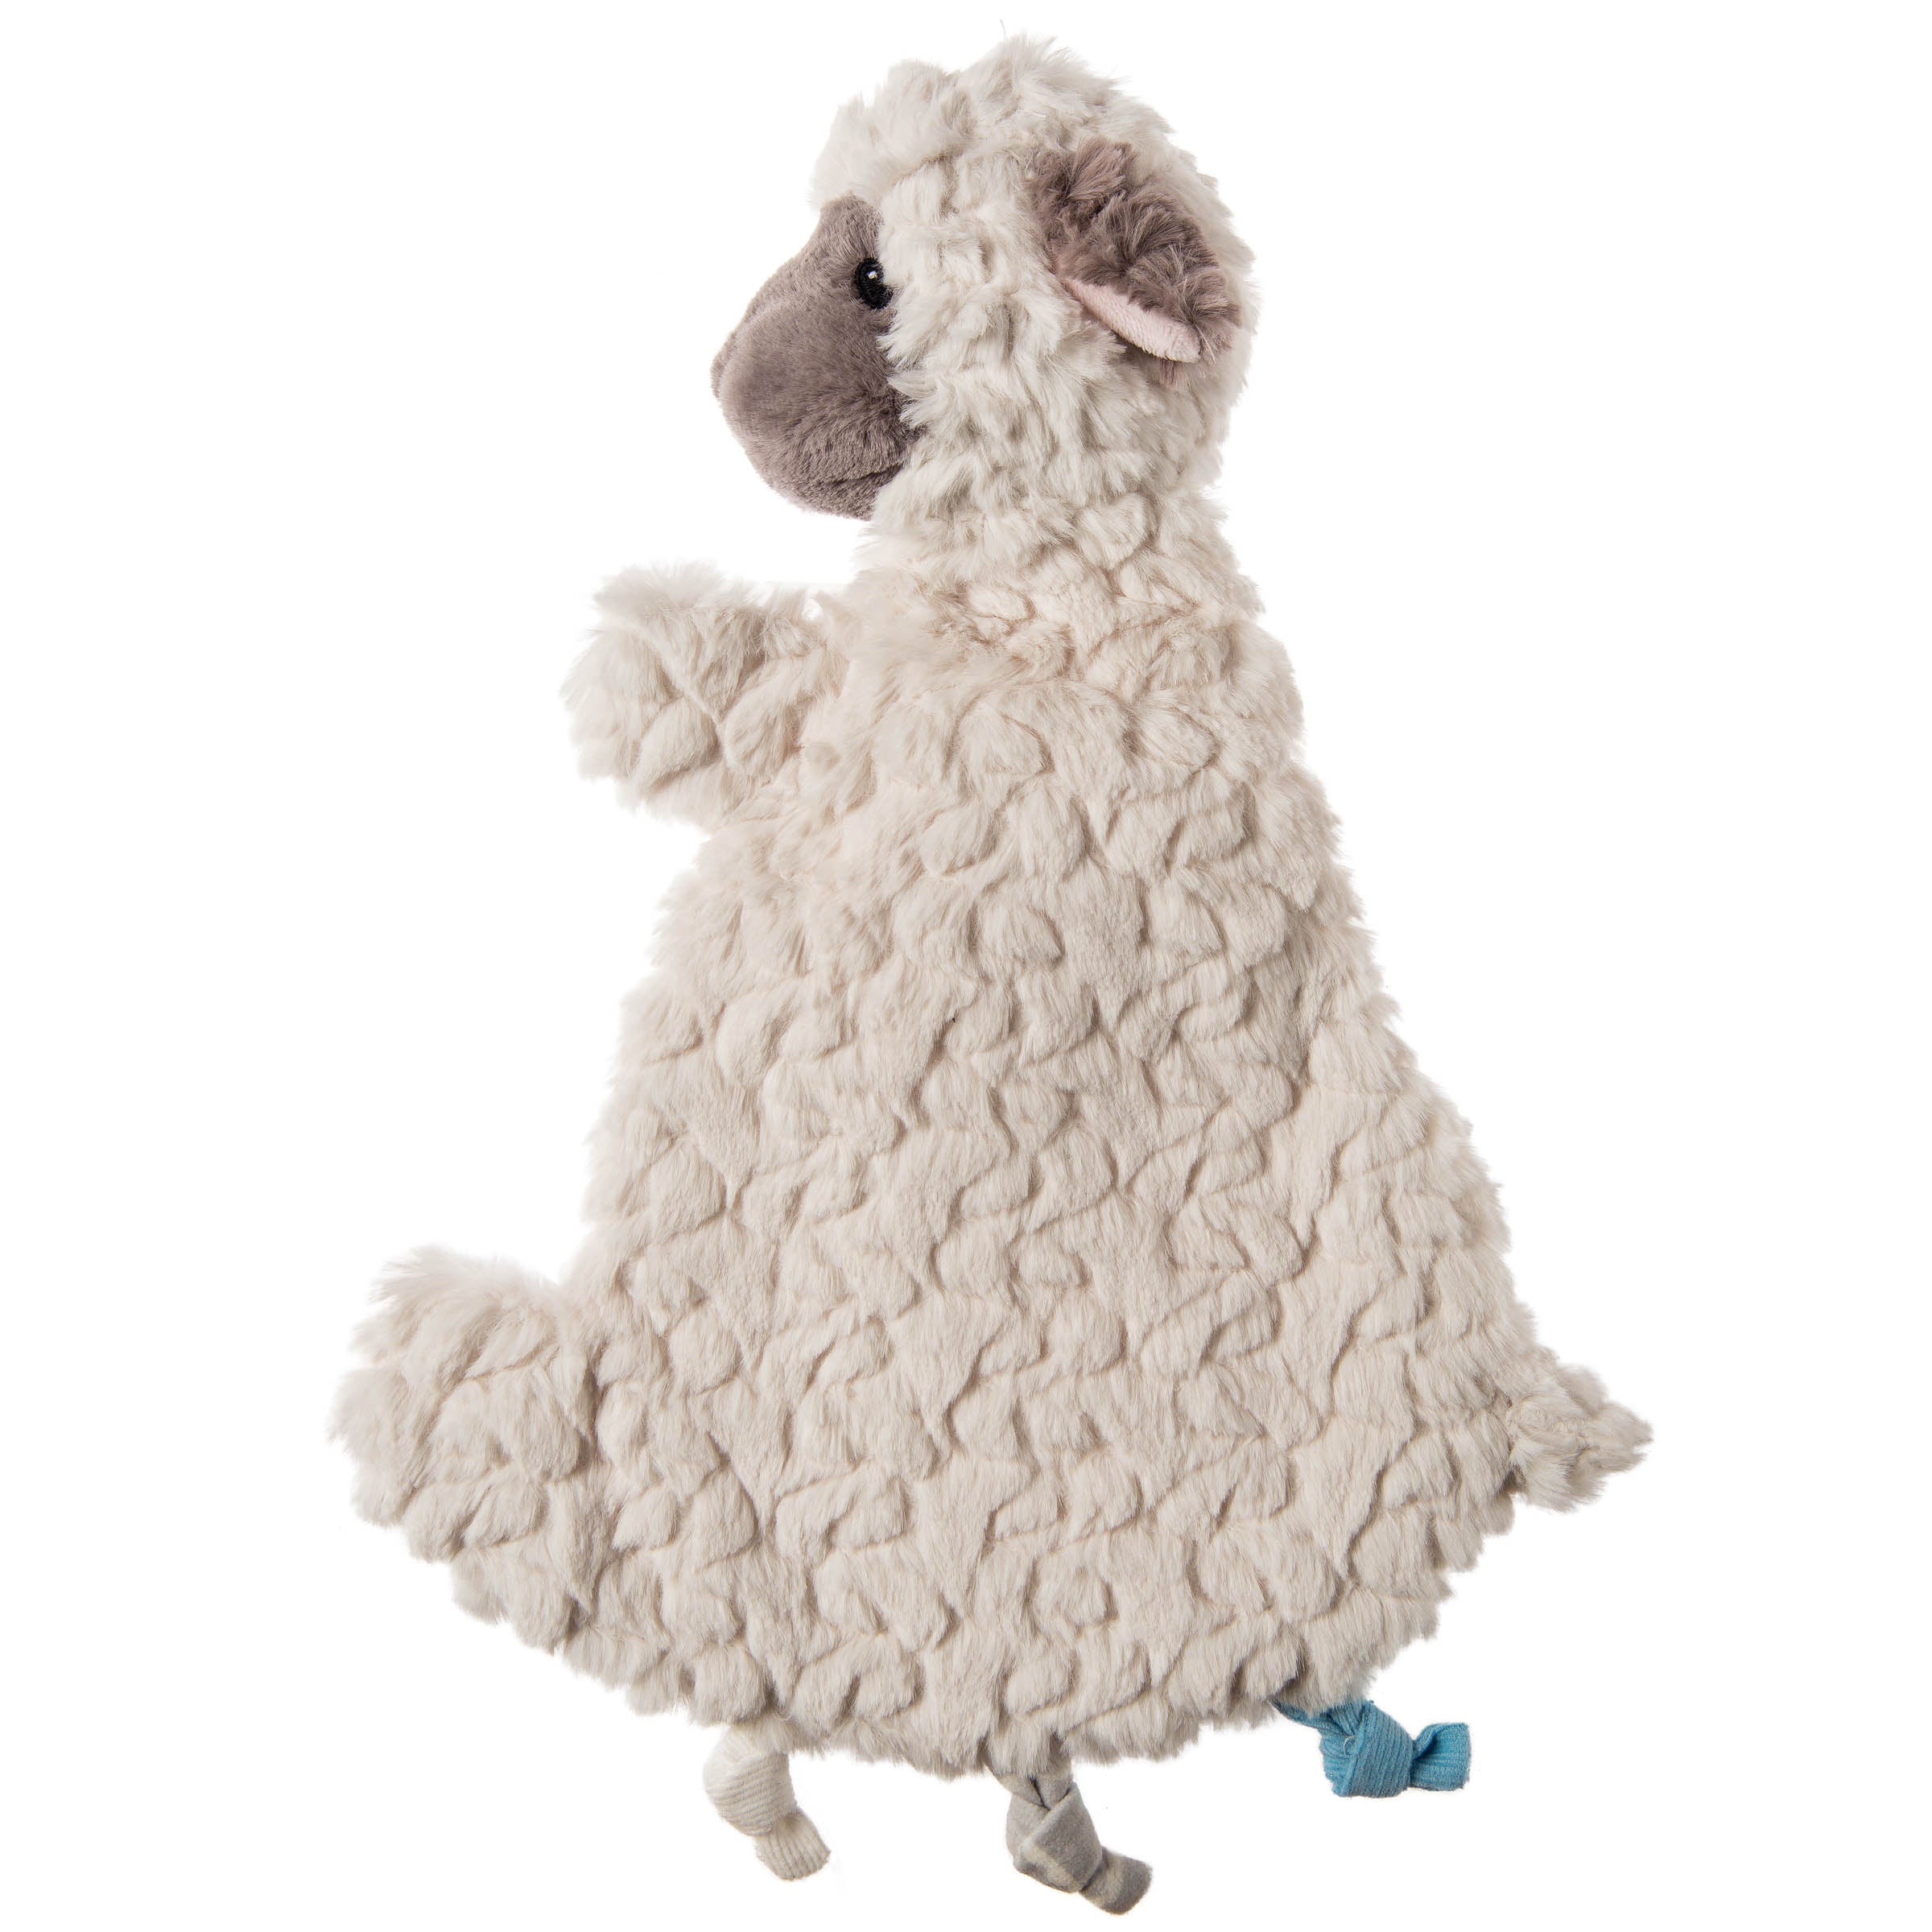 Snuggy Nuggles Lamb Blanket - Twinkle Twinkle Little One